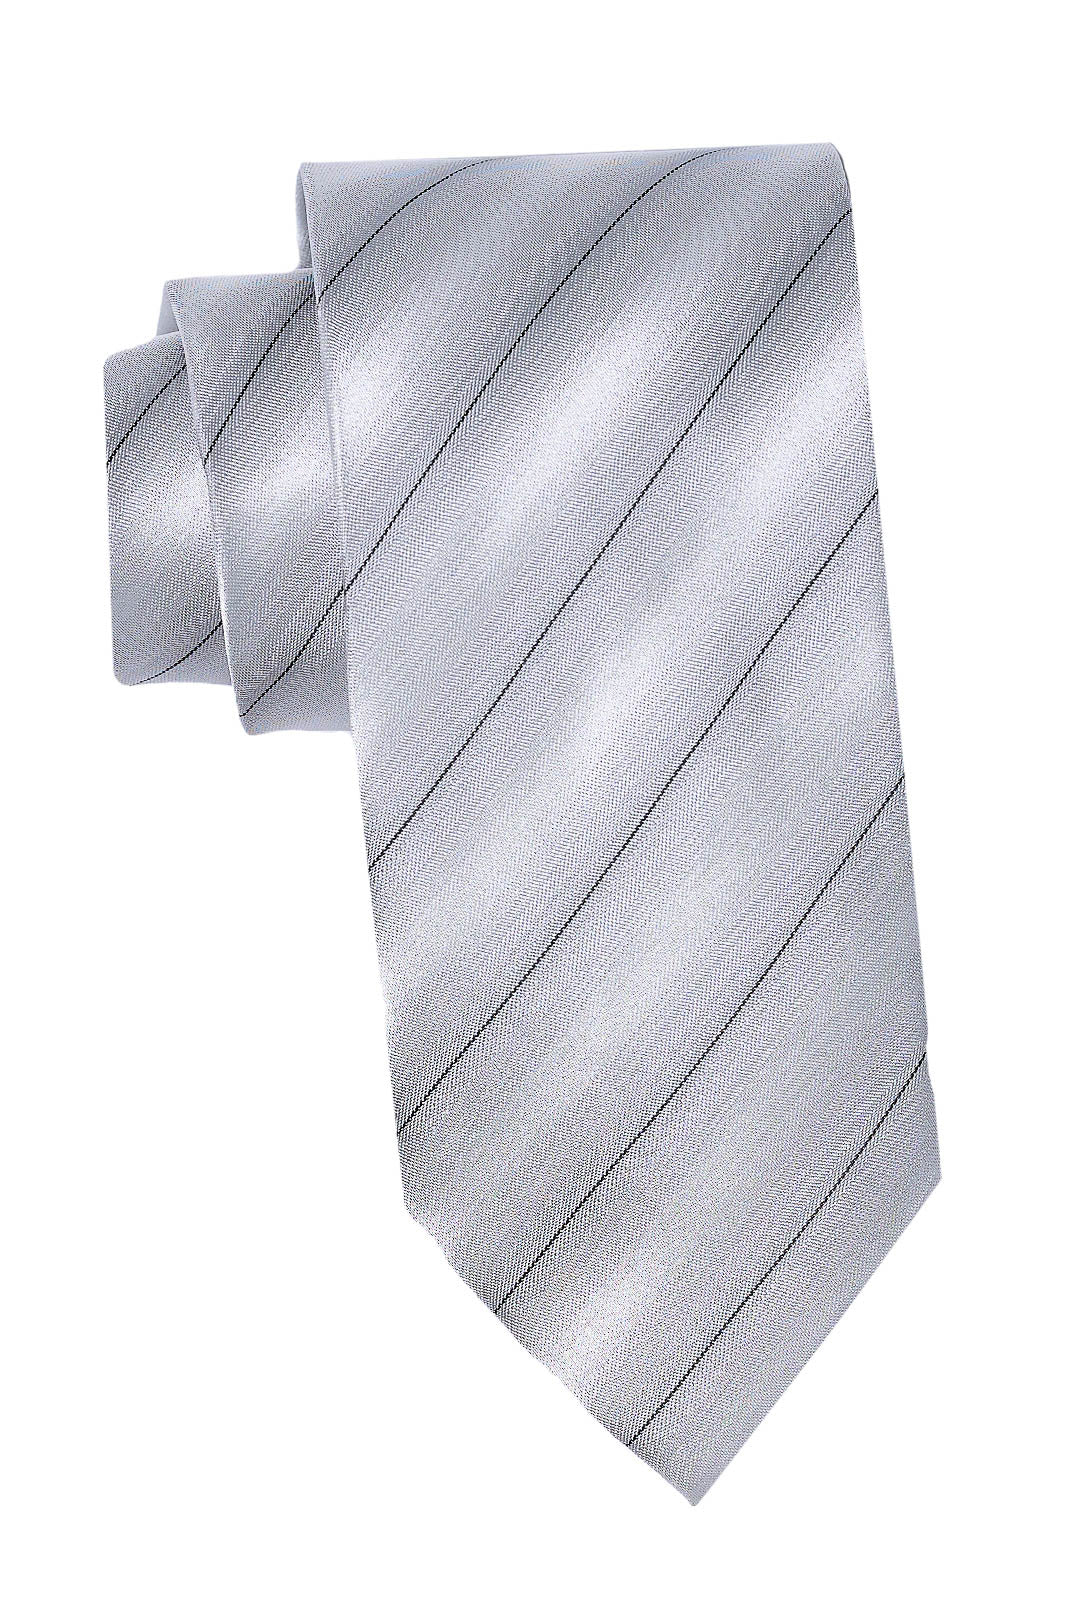 Classic "Degradé" Tie